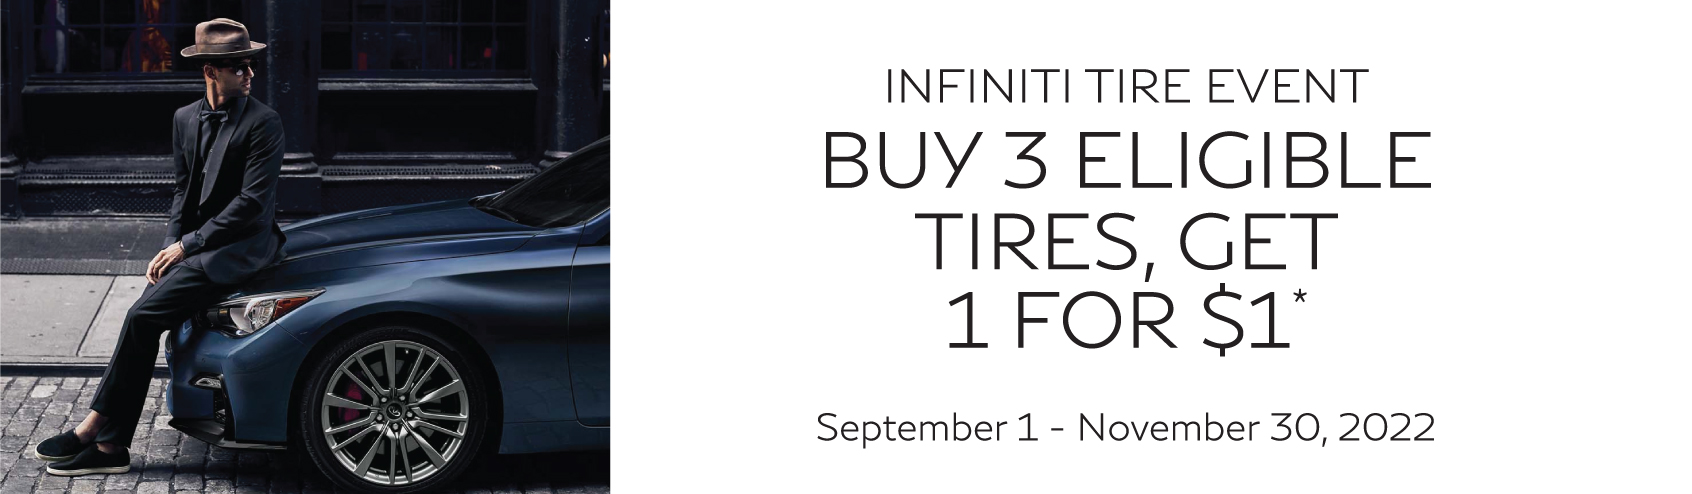 INFINITI Tire Event - Buy 3 Eligible Tires, Get 1 For $1 | September 1 - Novemner 30, 2022